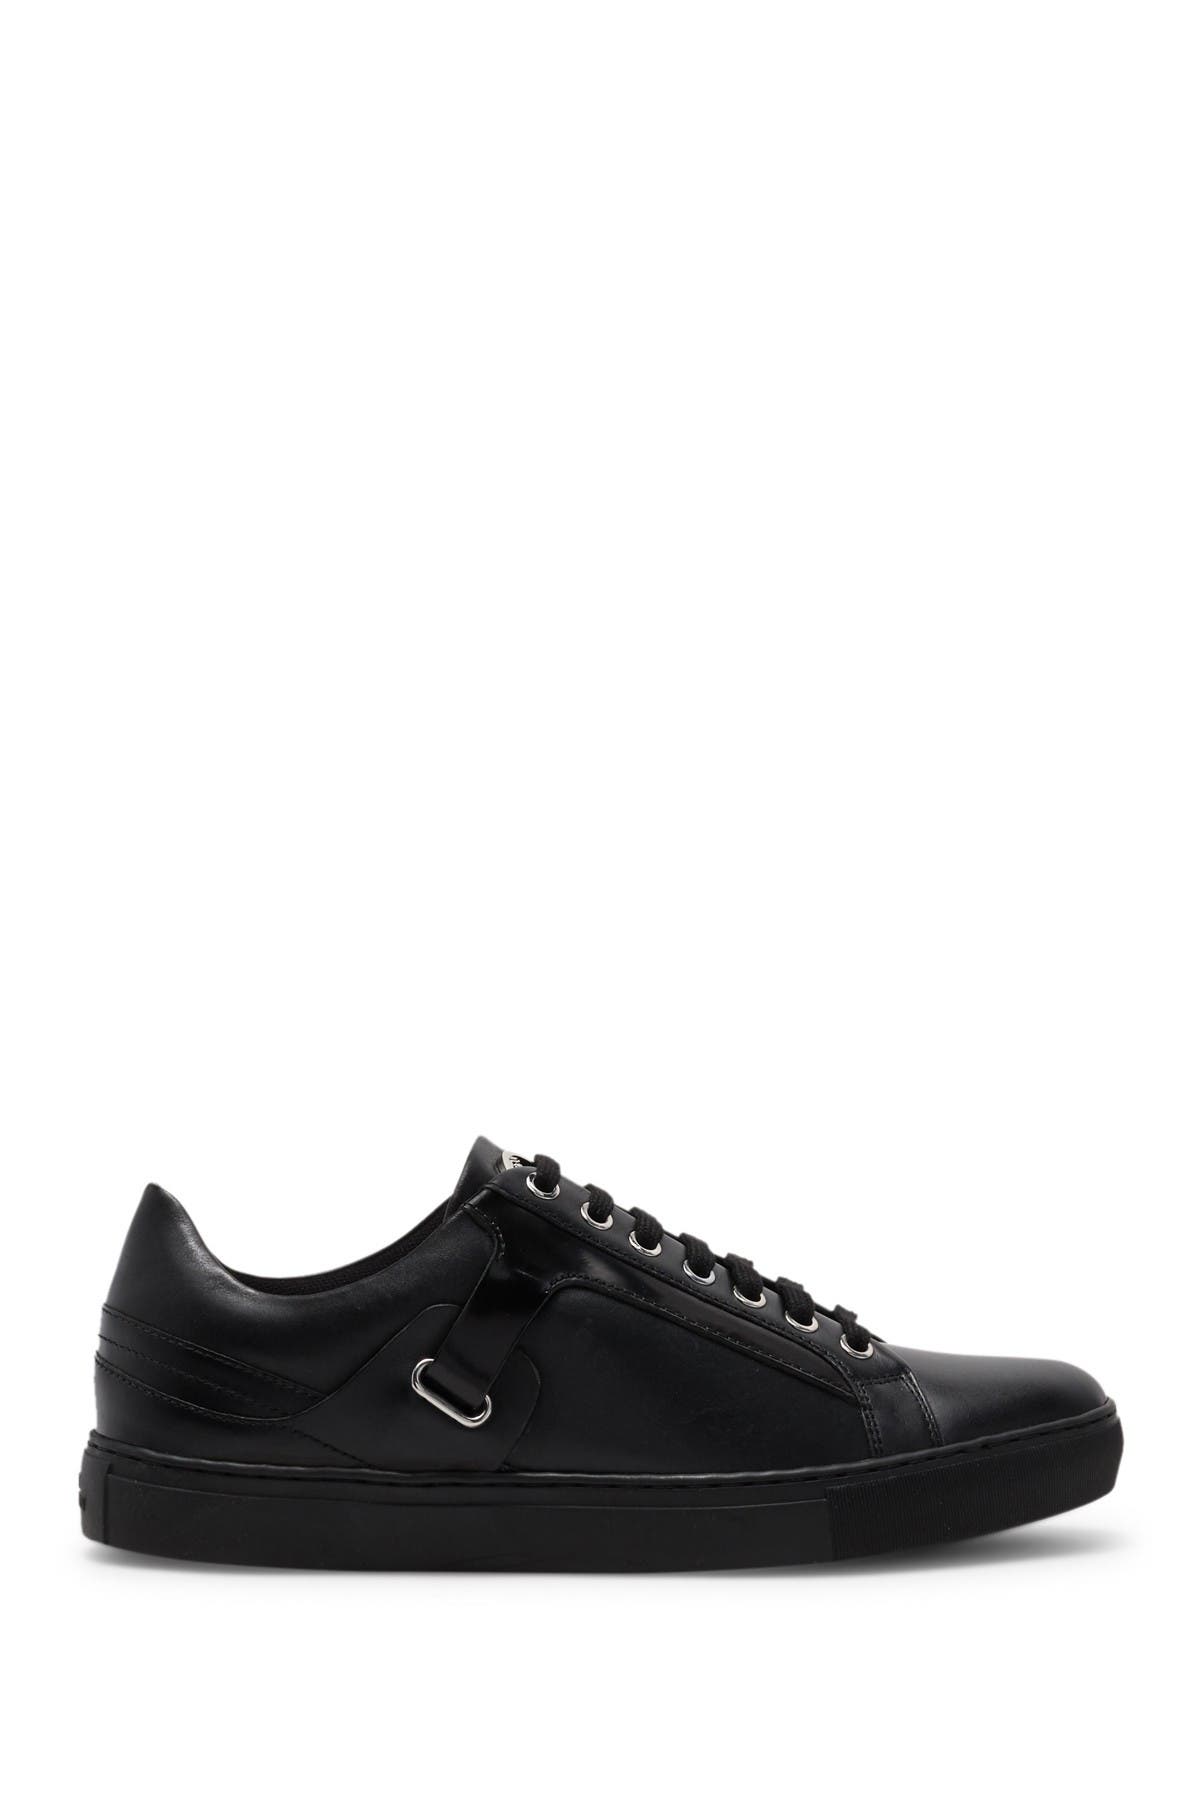 versace nappa leather sneaker